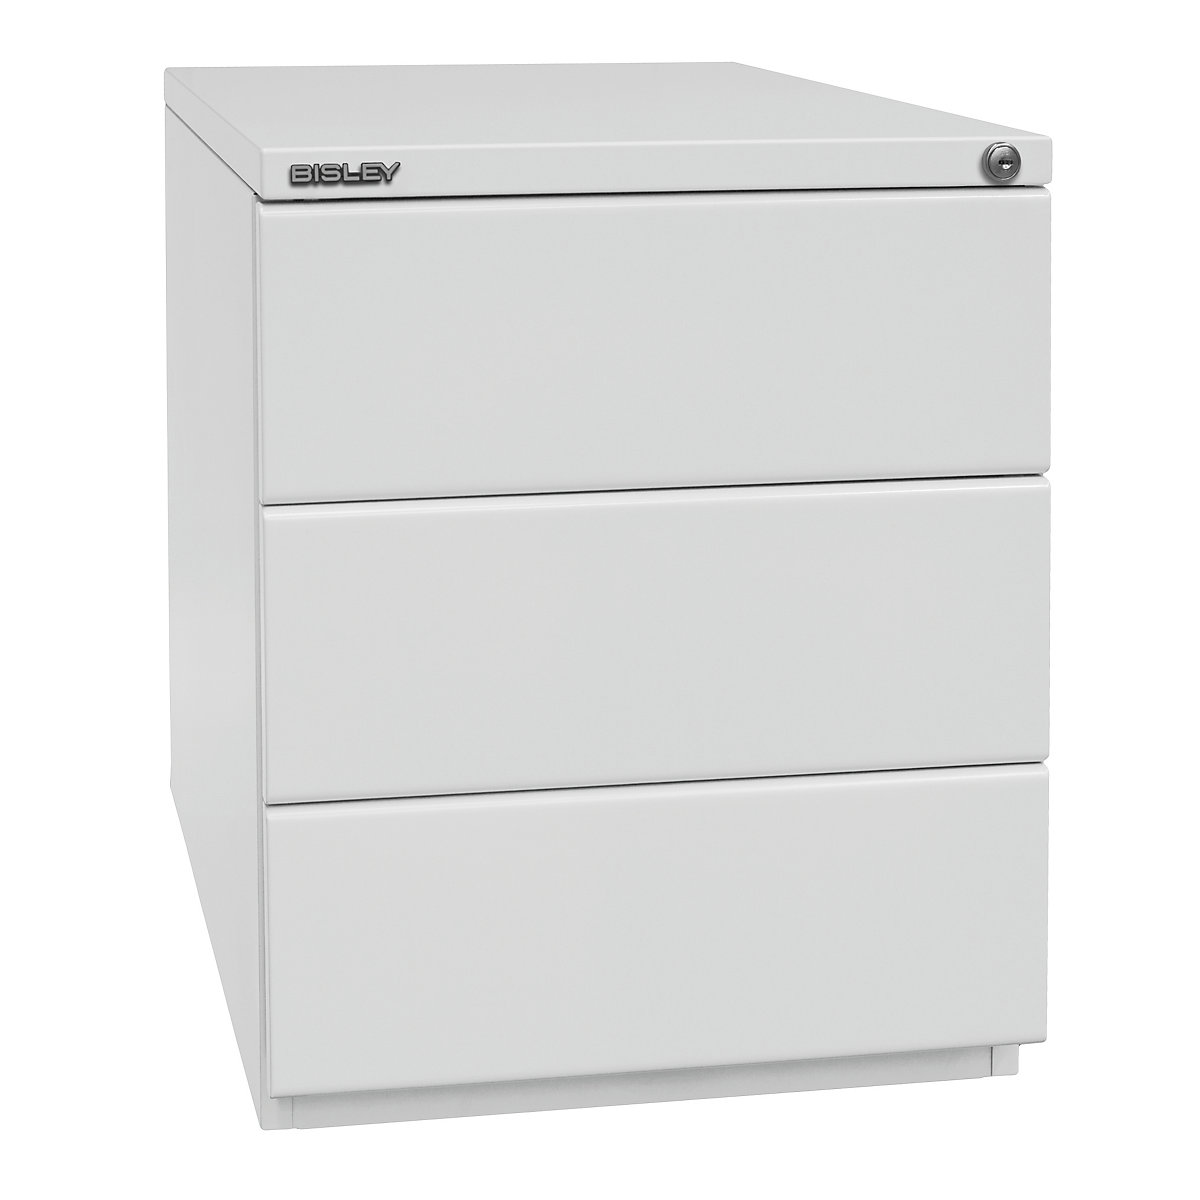 OBA mobile pedestal – BISLEY, 3 universal drawers, light grey-7